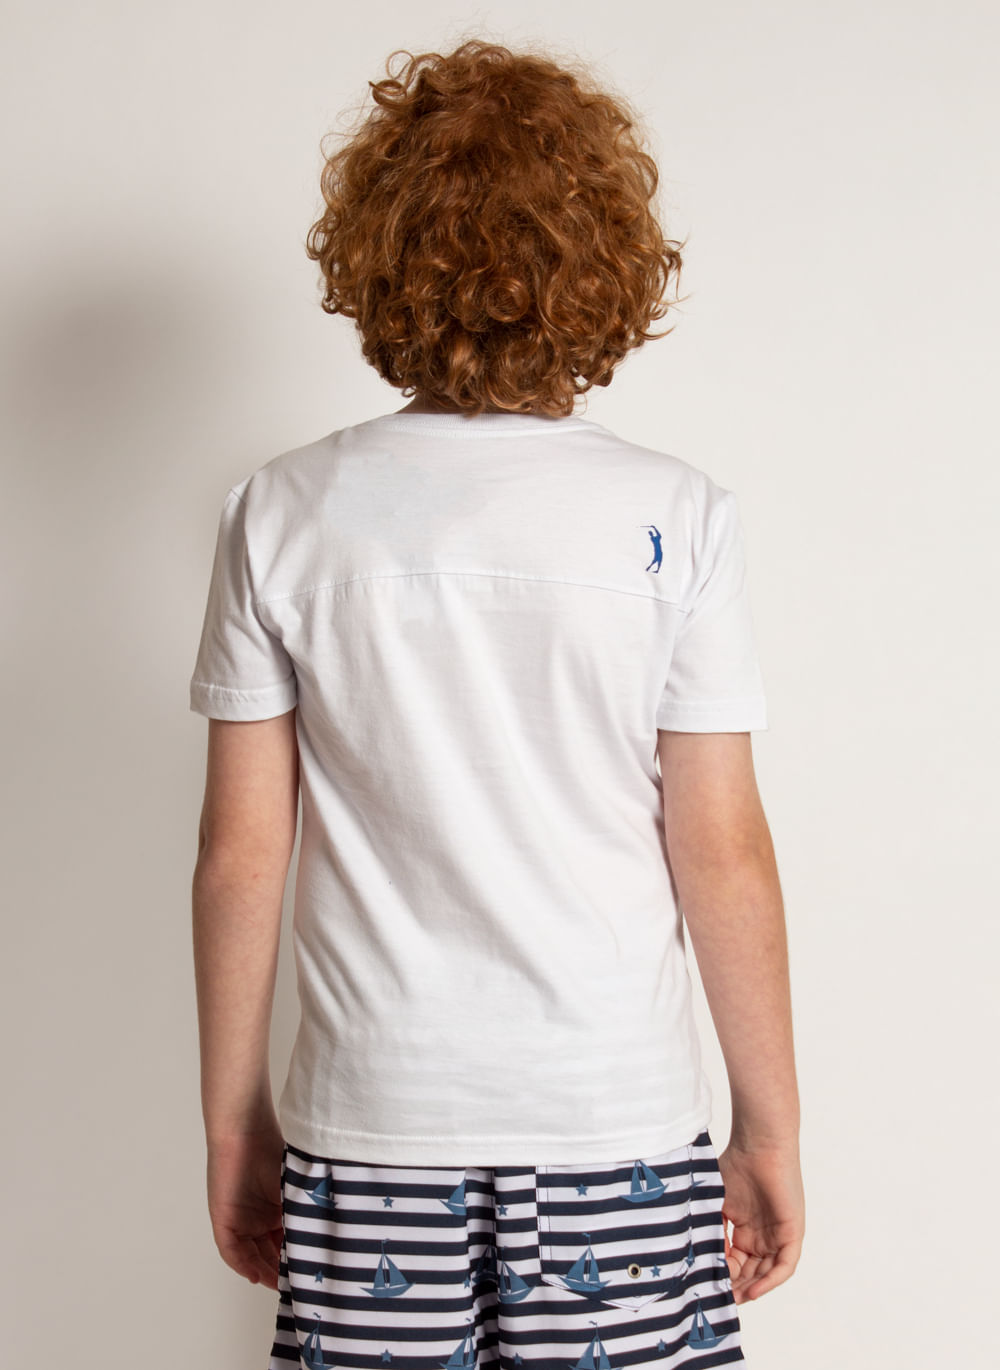 camiseta-estampada-aleatory-kids-enjoy-branca-modelo-2020-2-